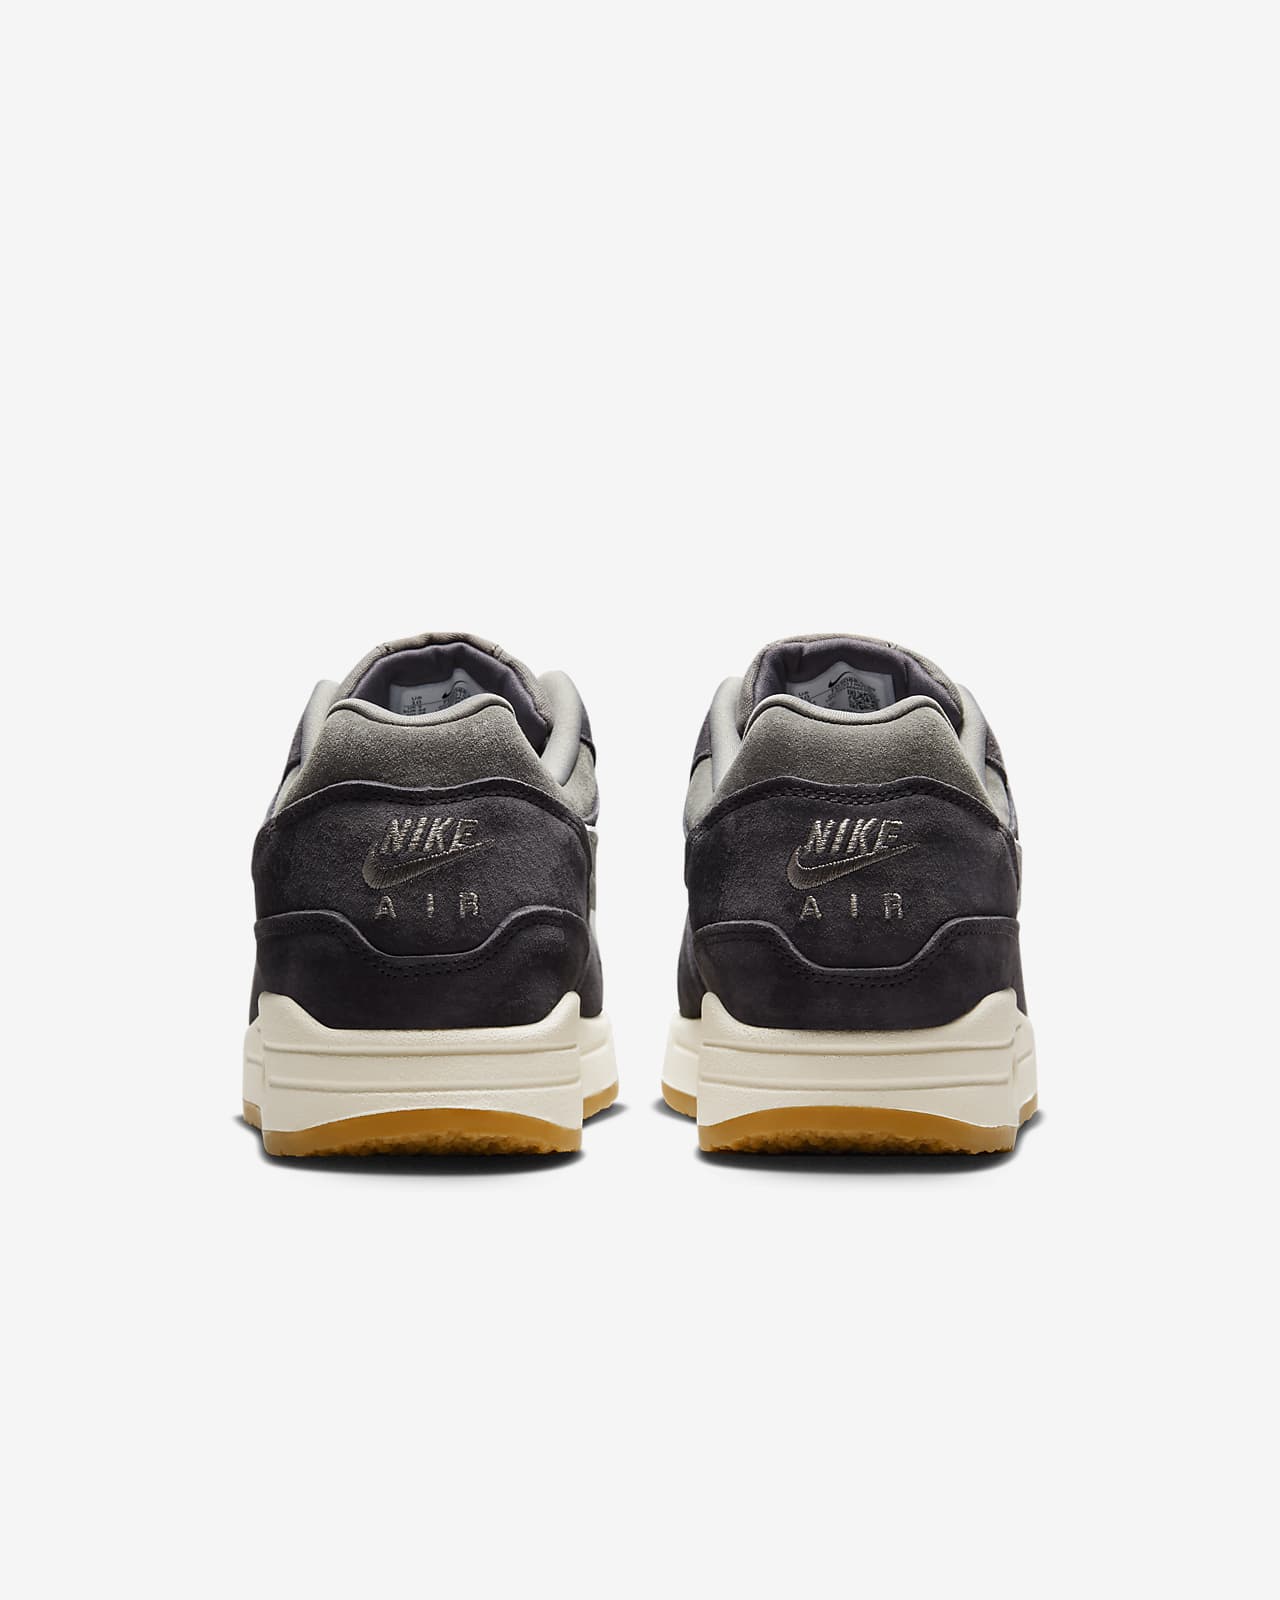 Nike Air Max 1 Premium 2 Shoes